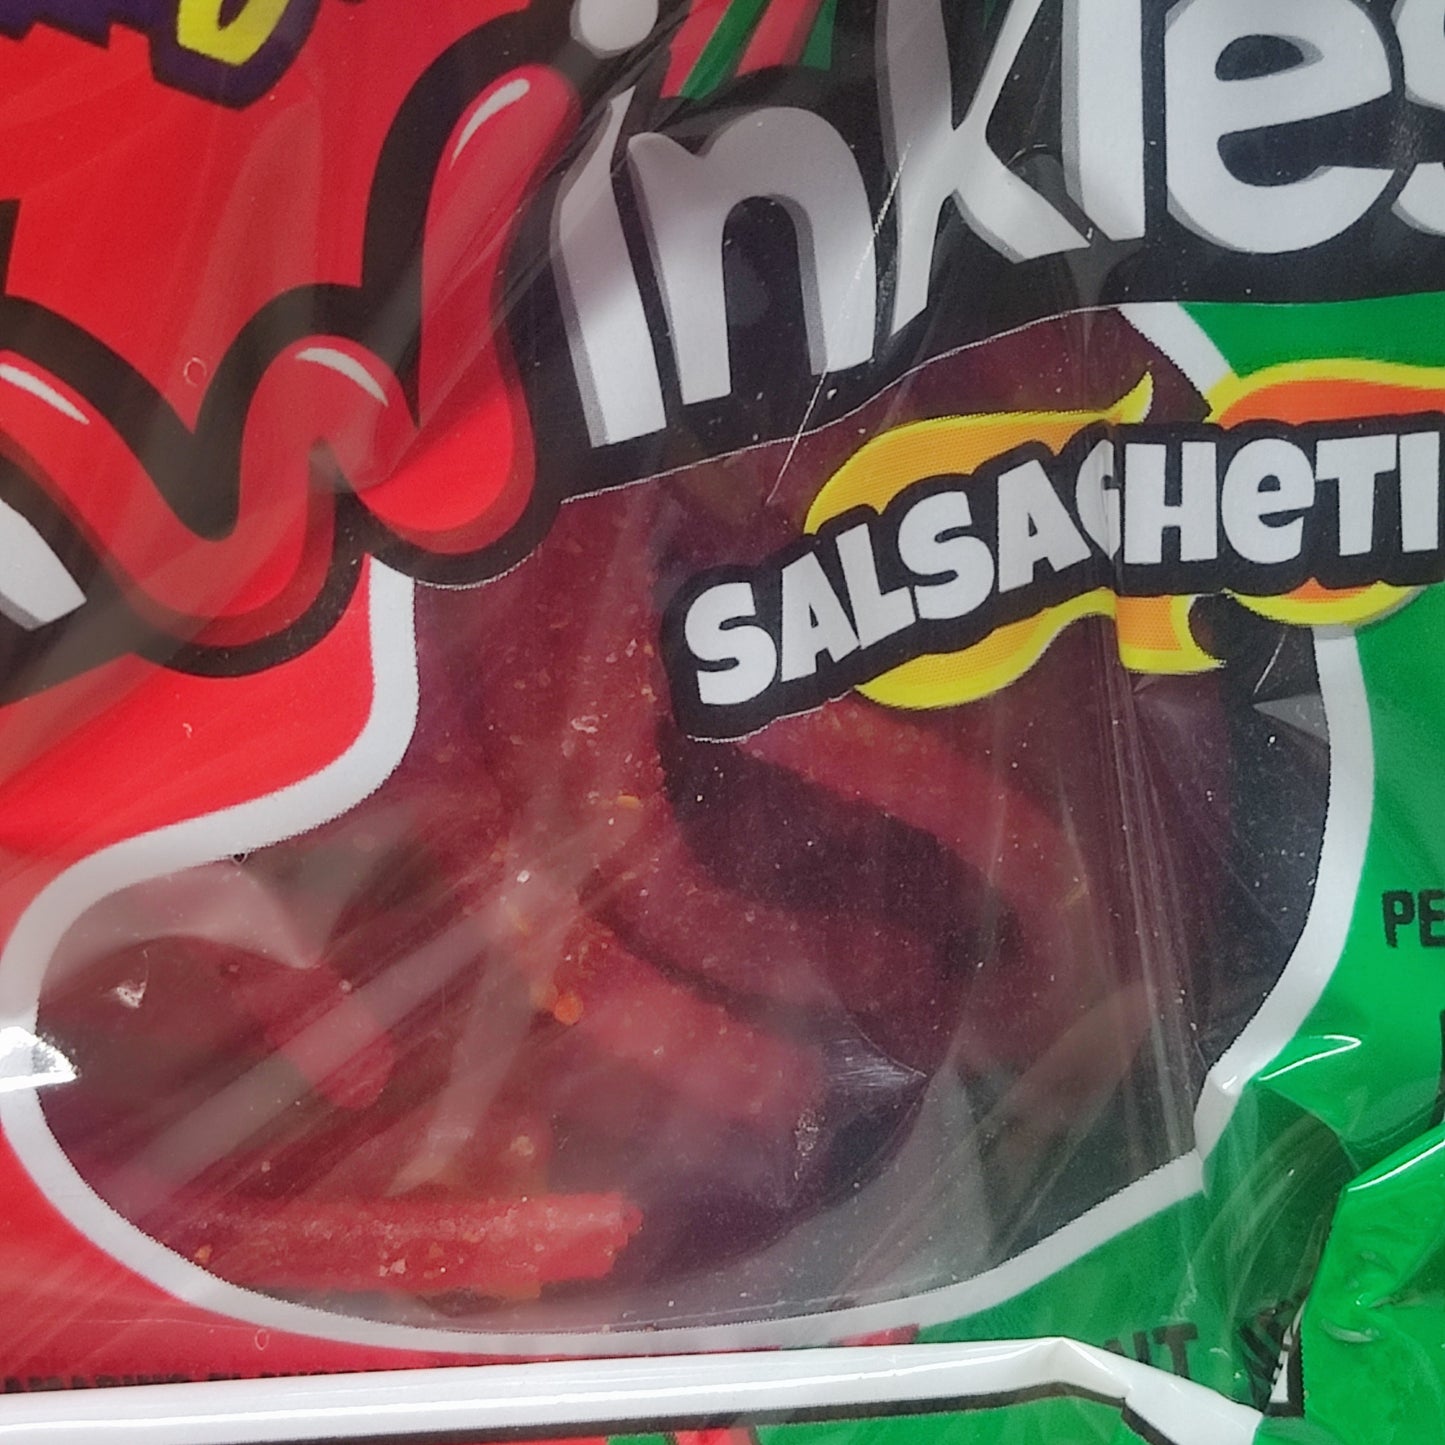 LUCAS SKWINKLES Salsagheti Watermelon Candy 12-Pack .85 oz (Exp 9/25)